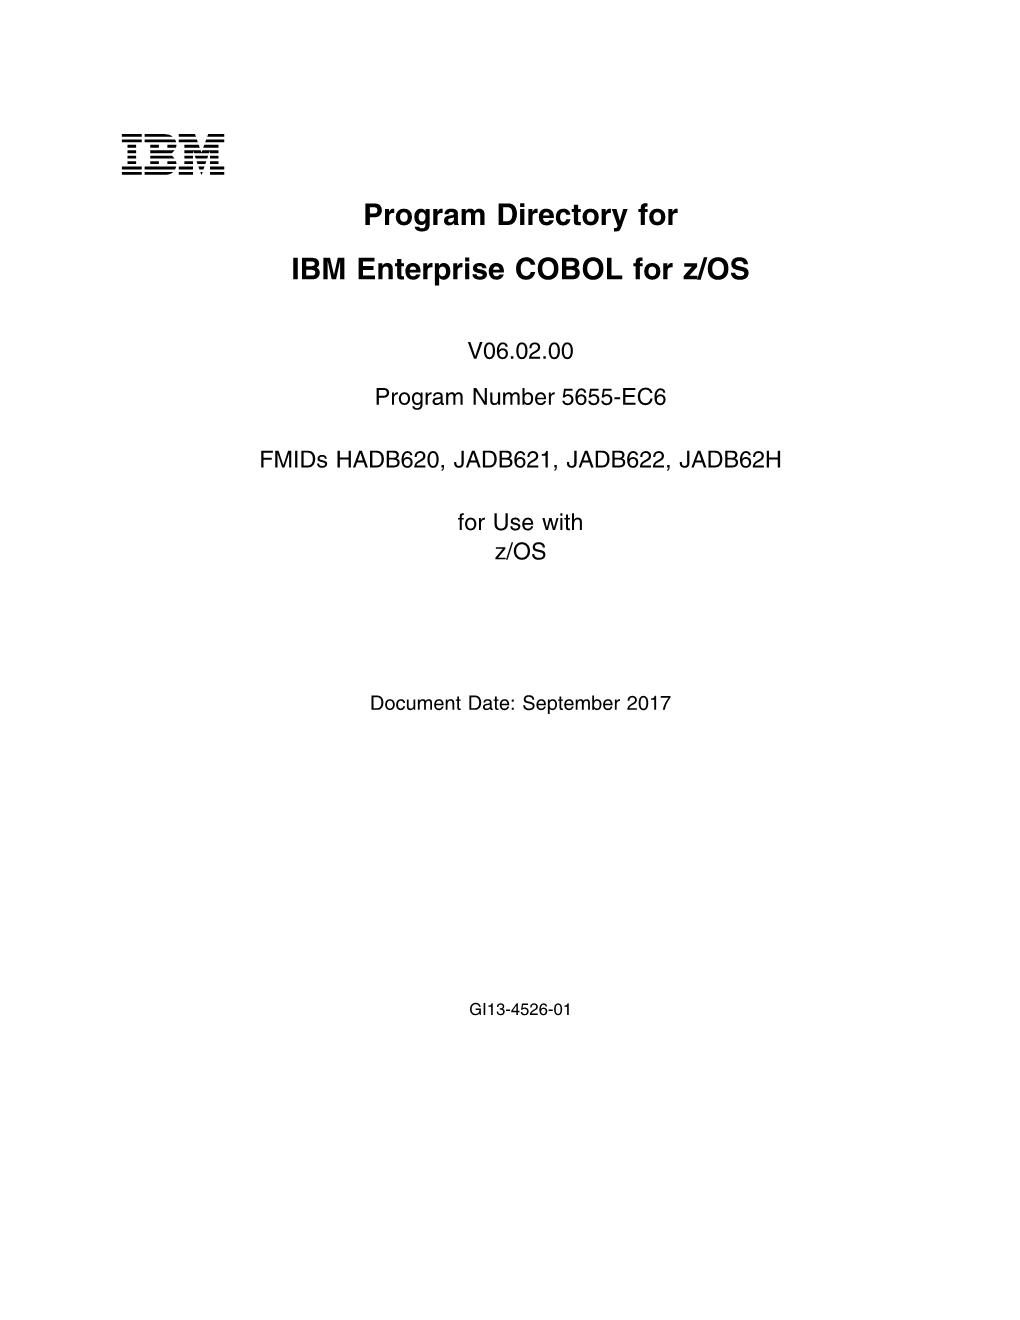 Program Directory for IBM Enterprise COBOL for Z/OS